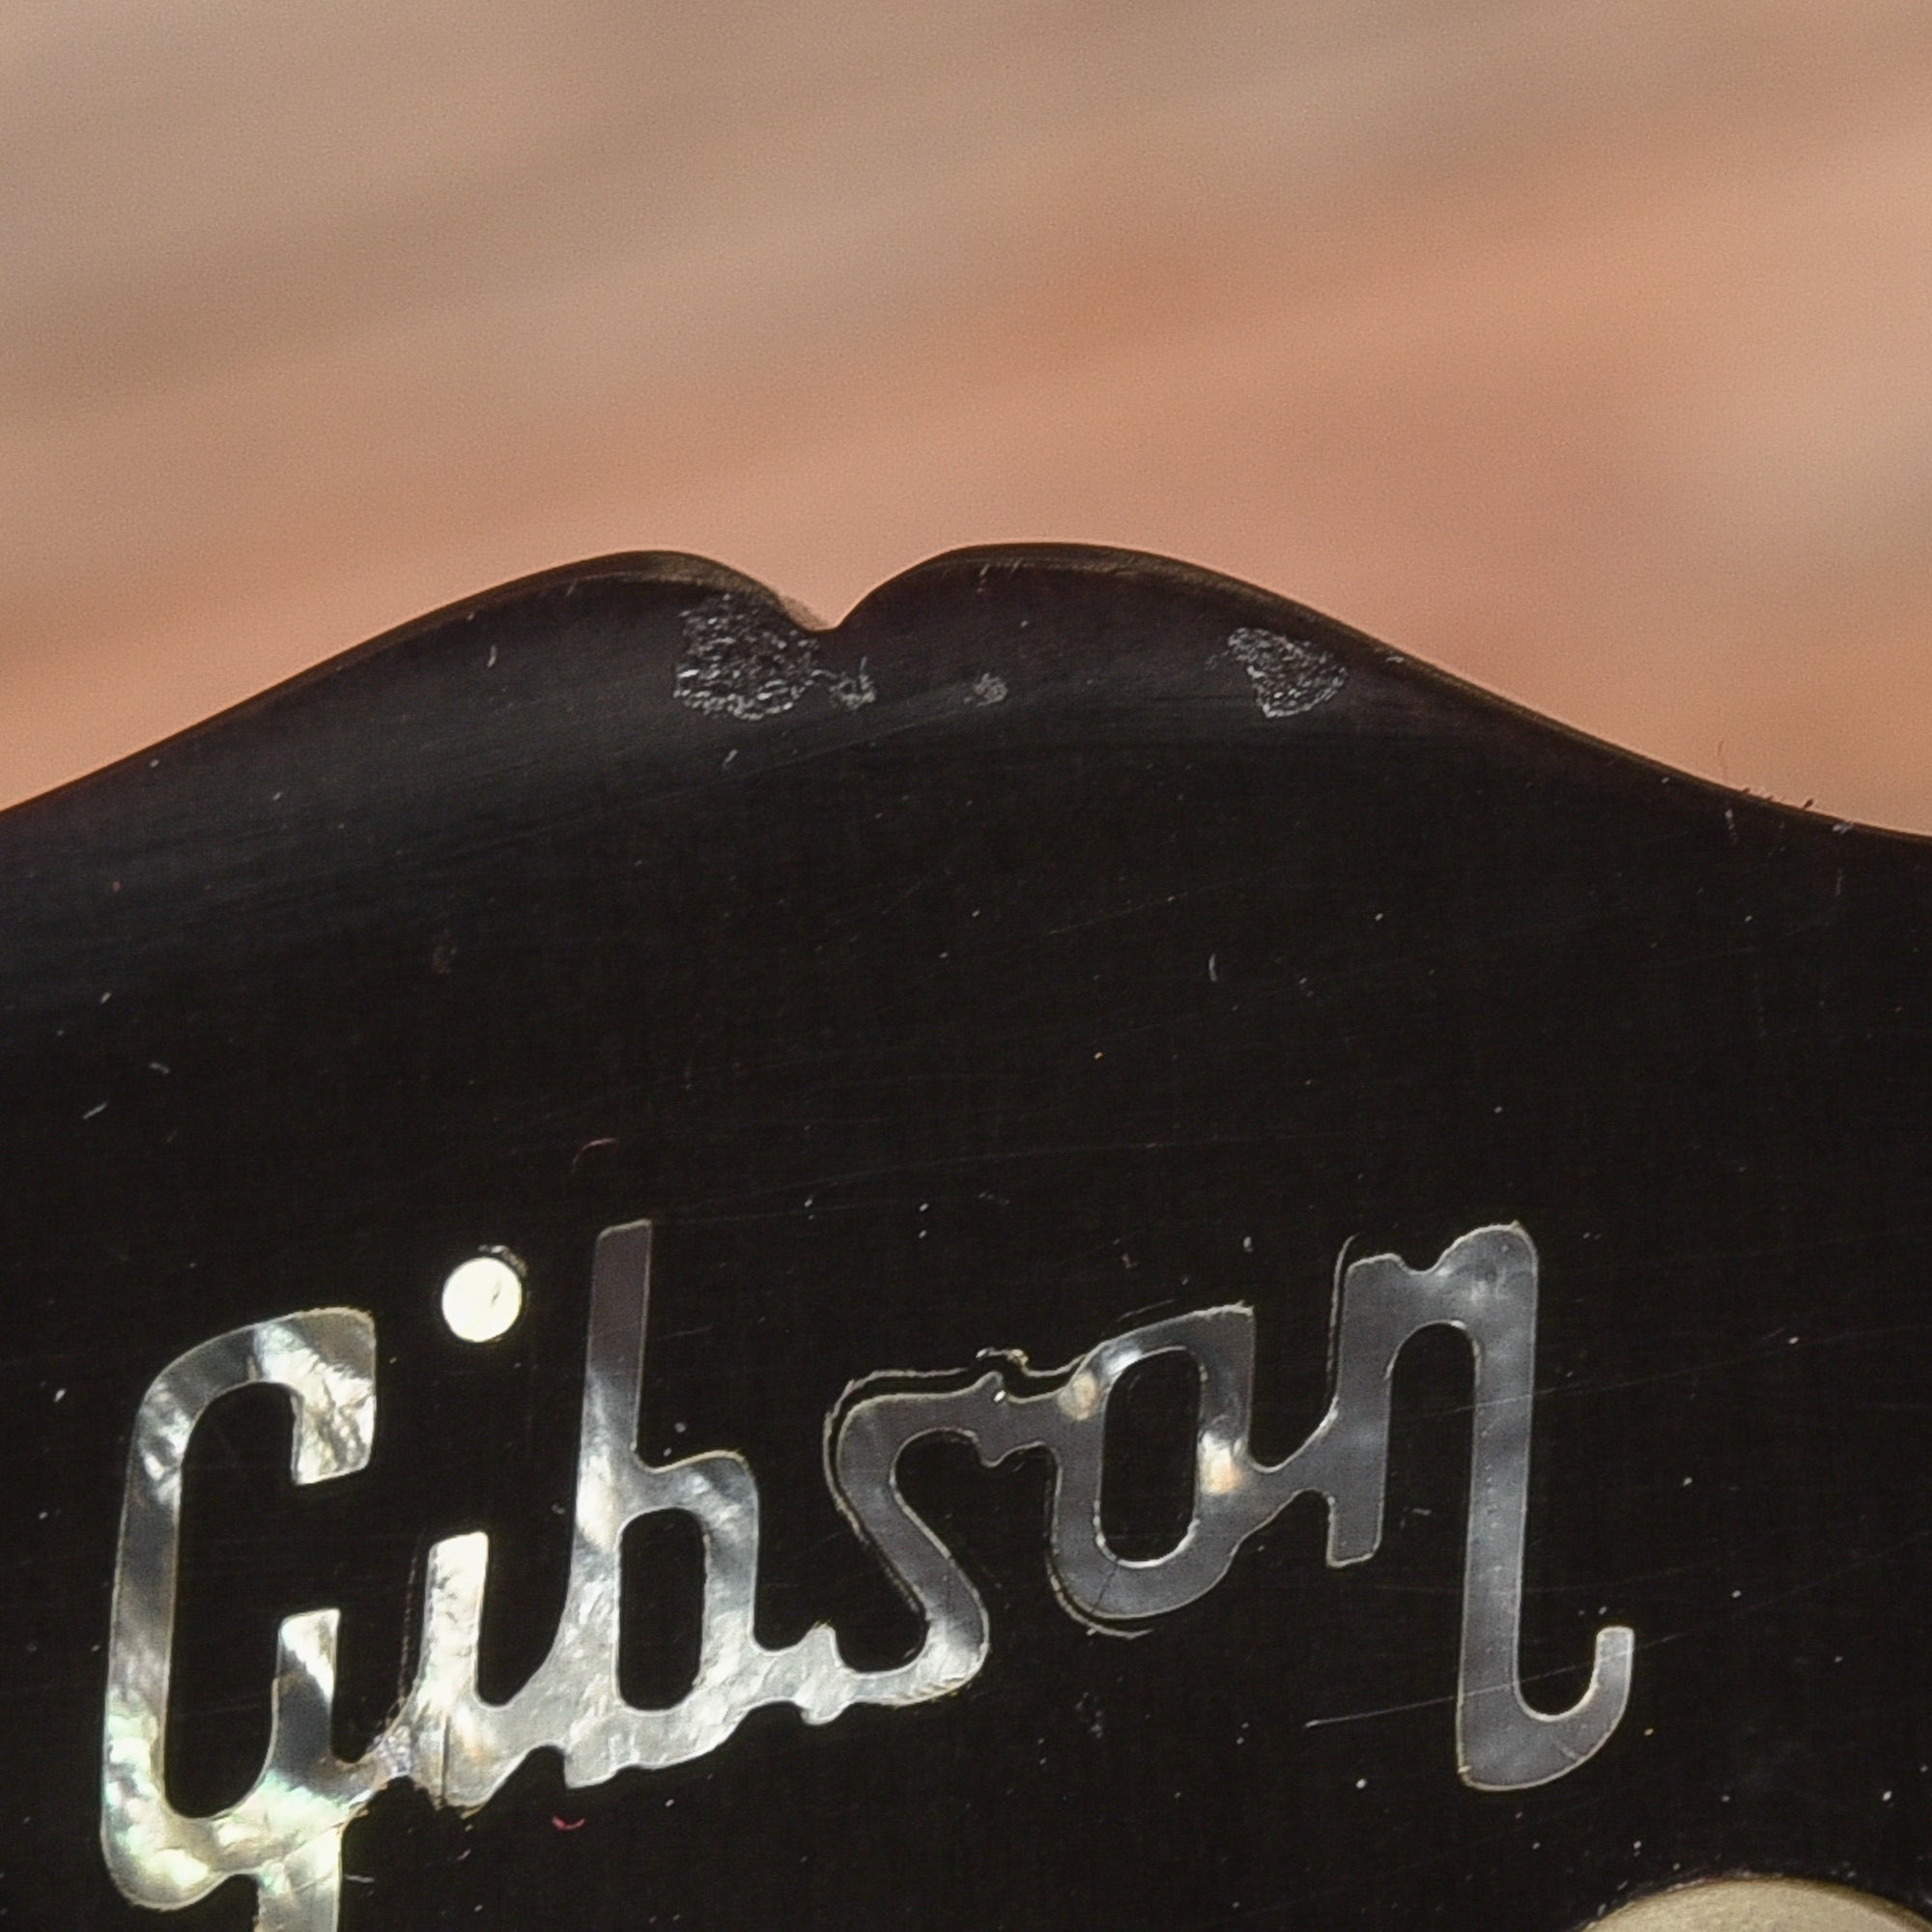 Gibson SG Standard Cherry 1974